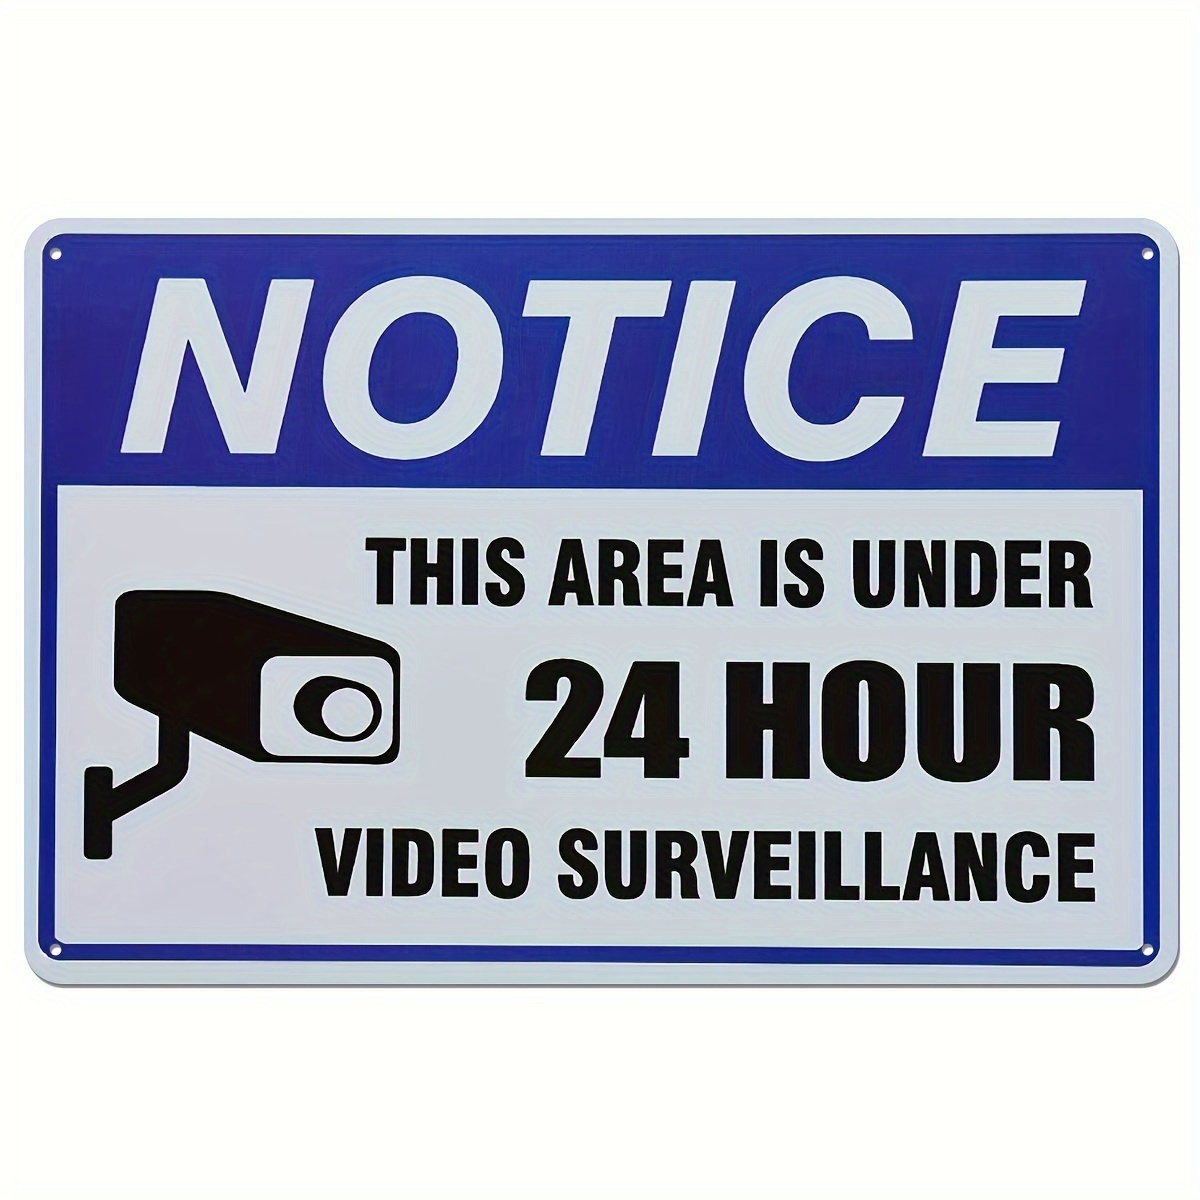 Camera security notice warning room sign